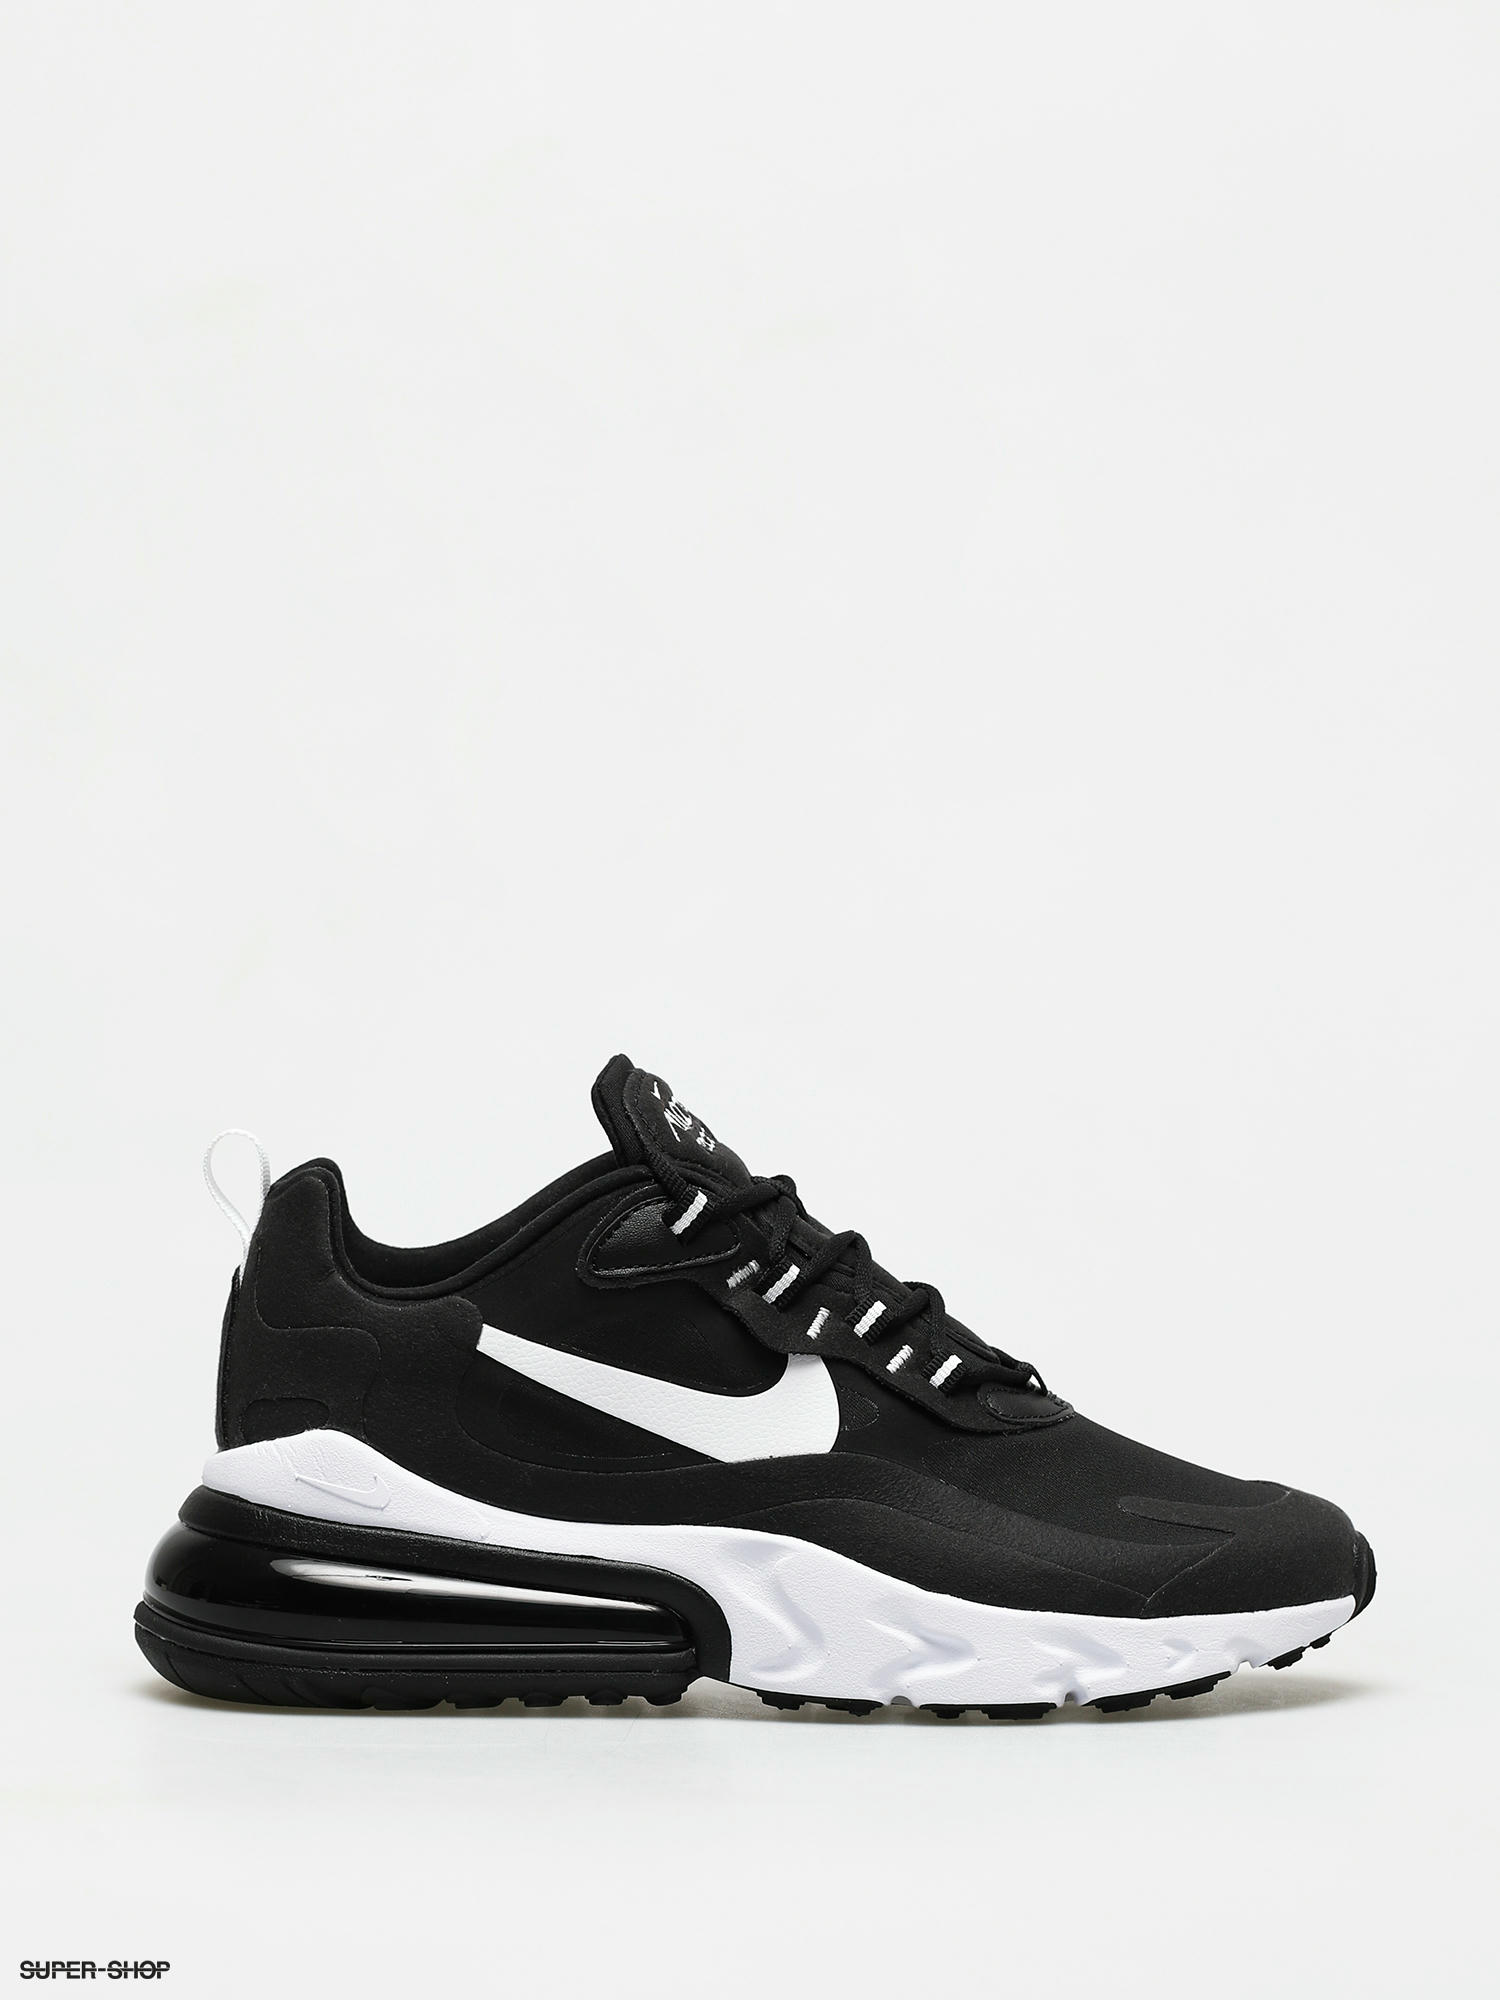 Nike Air Max 270 React Shoes Black White Black